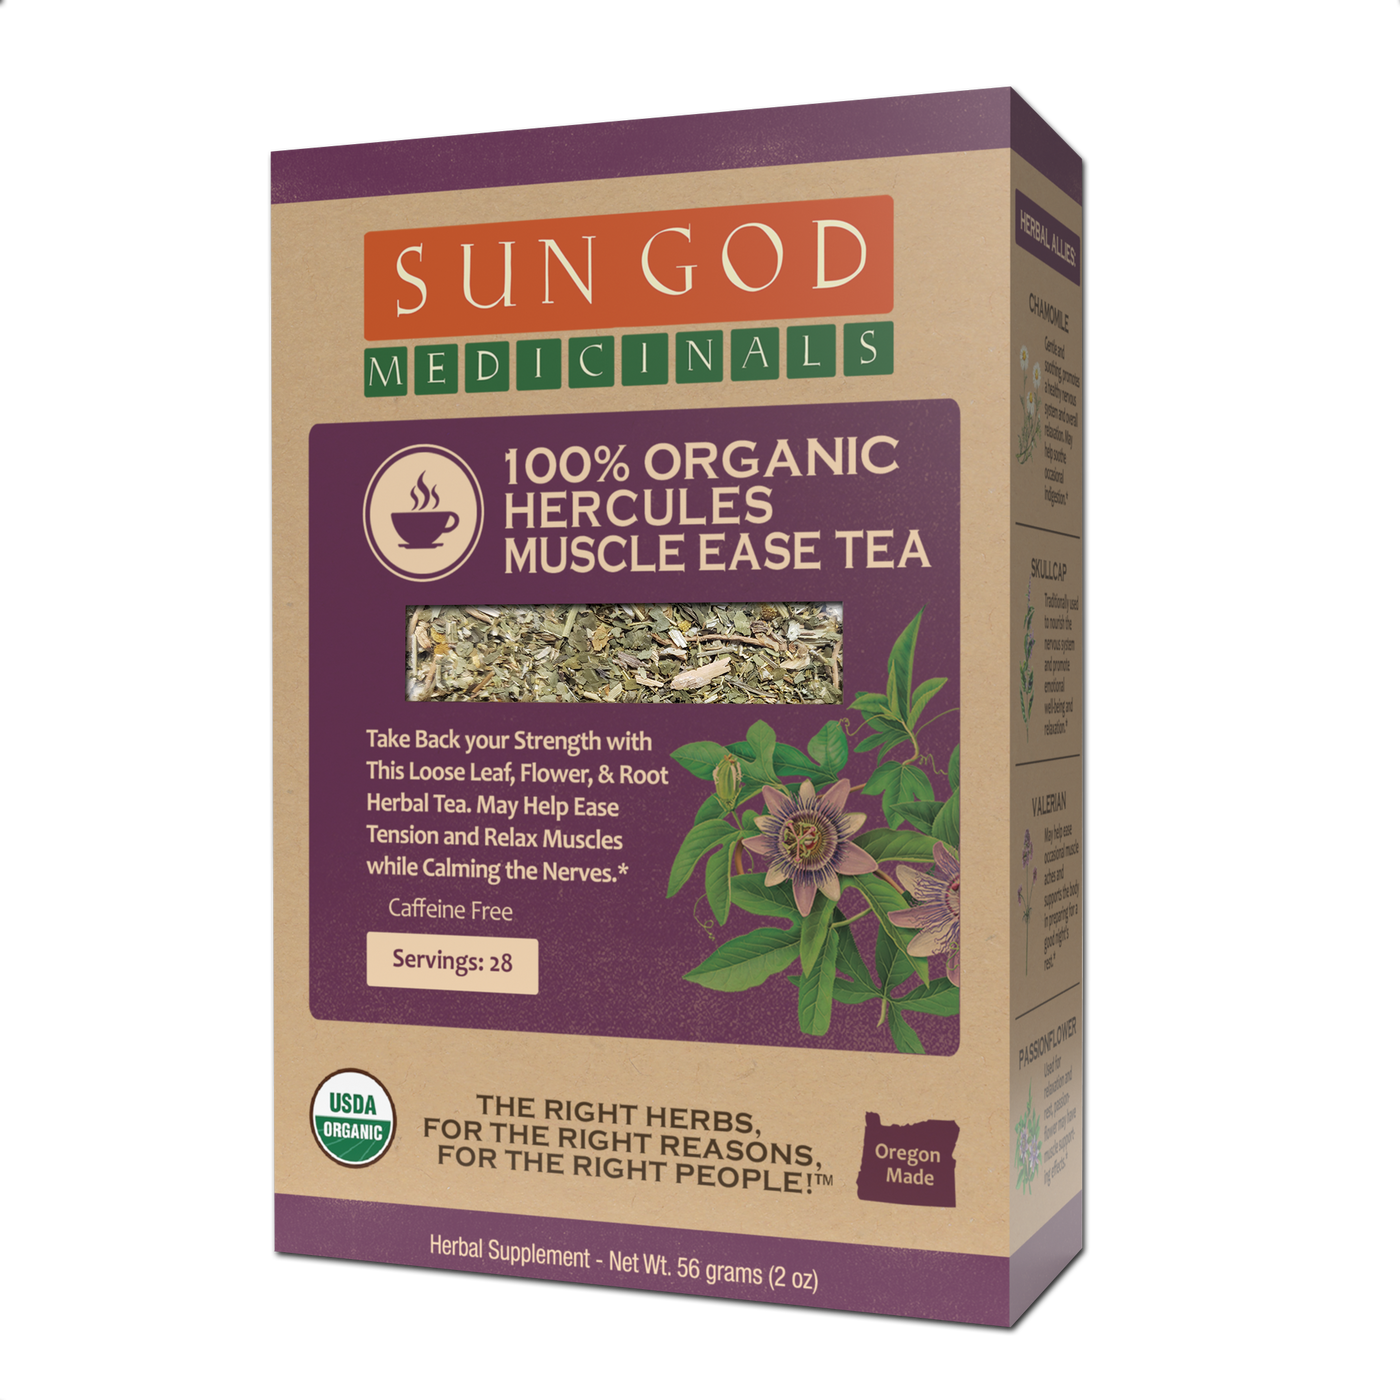 Hercules Muscle Ease Organic Herbal Tea - Sun God Medicinals